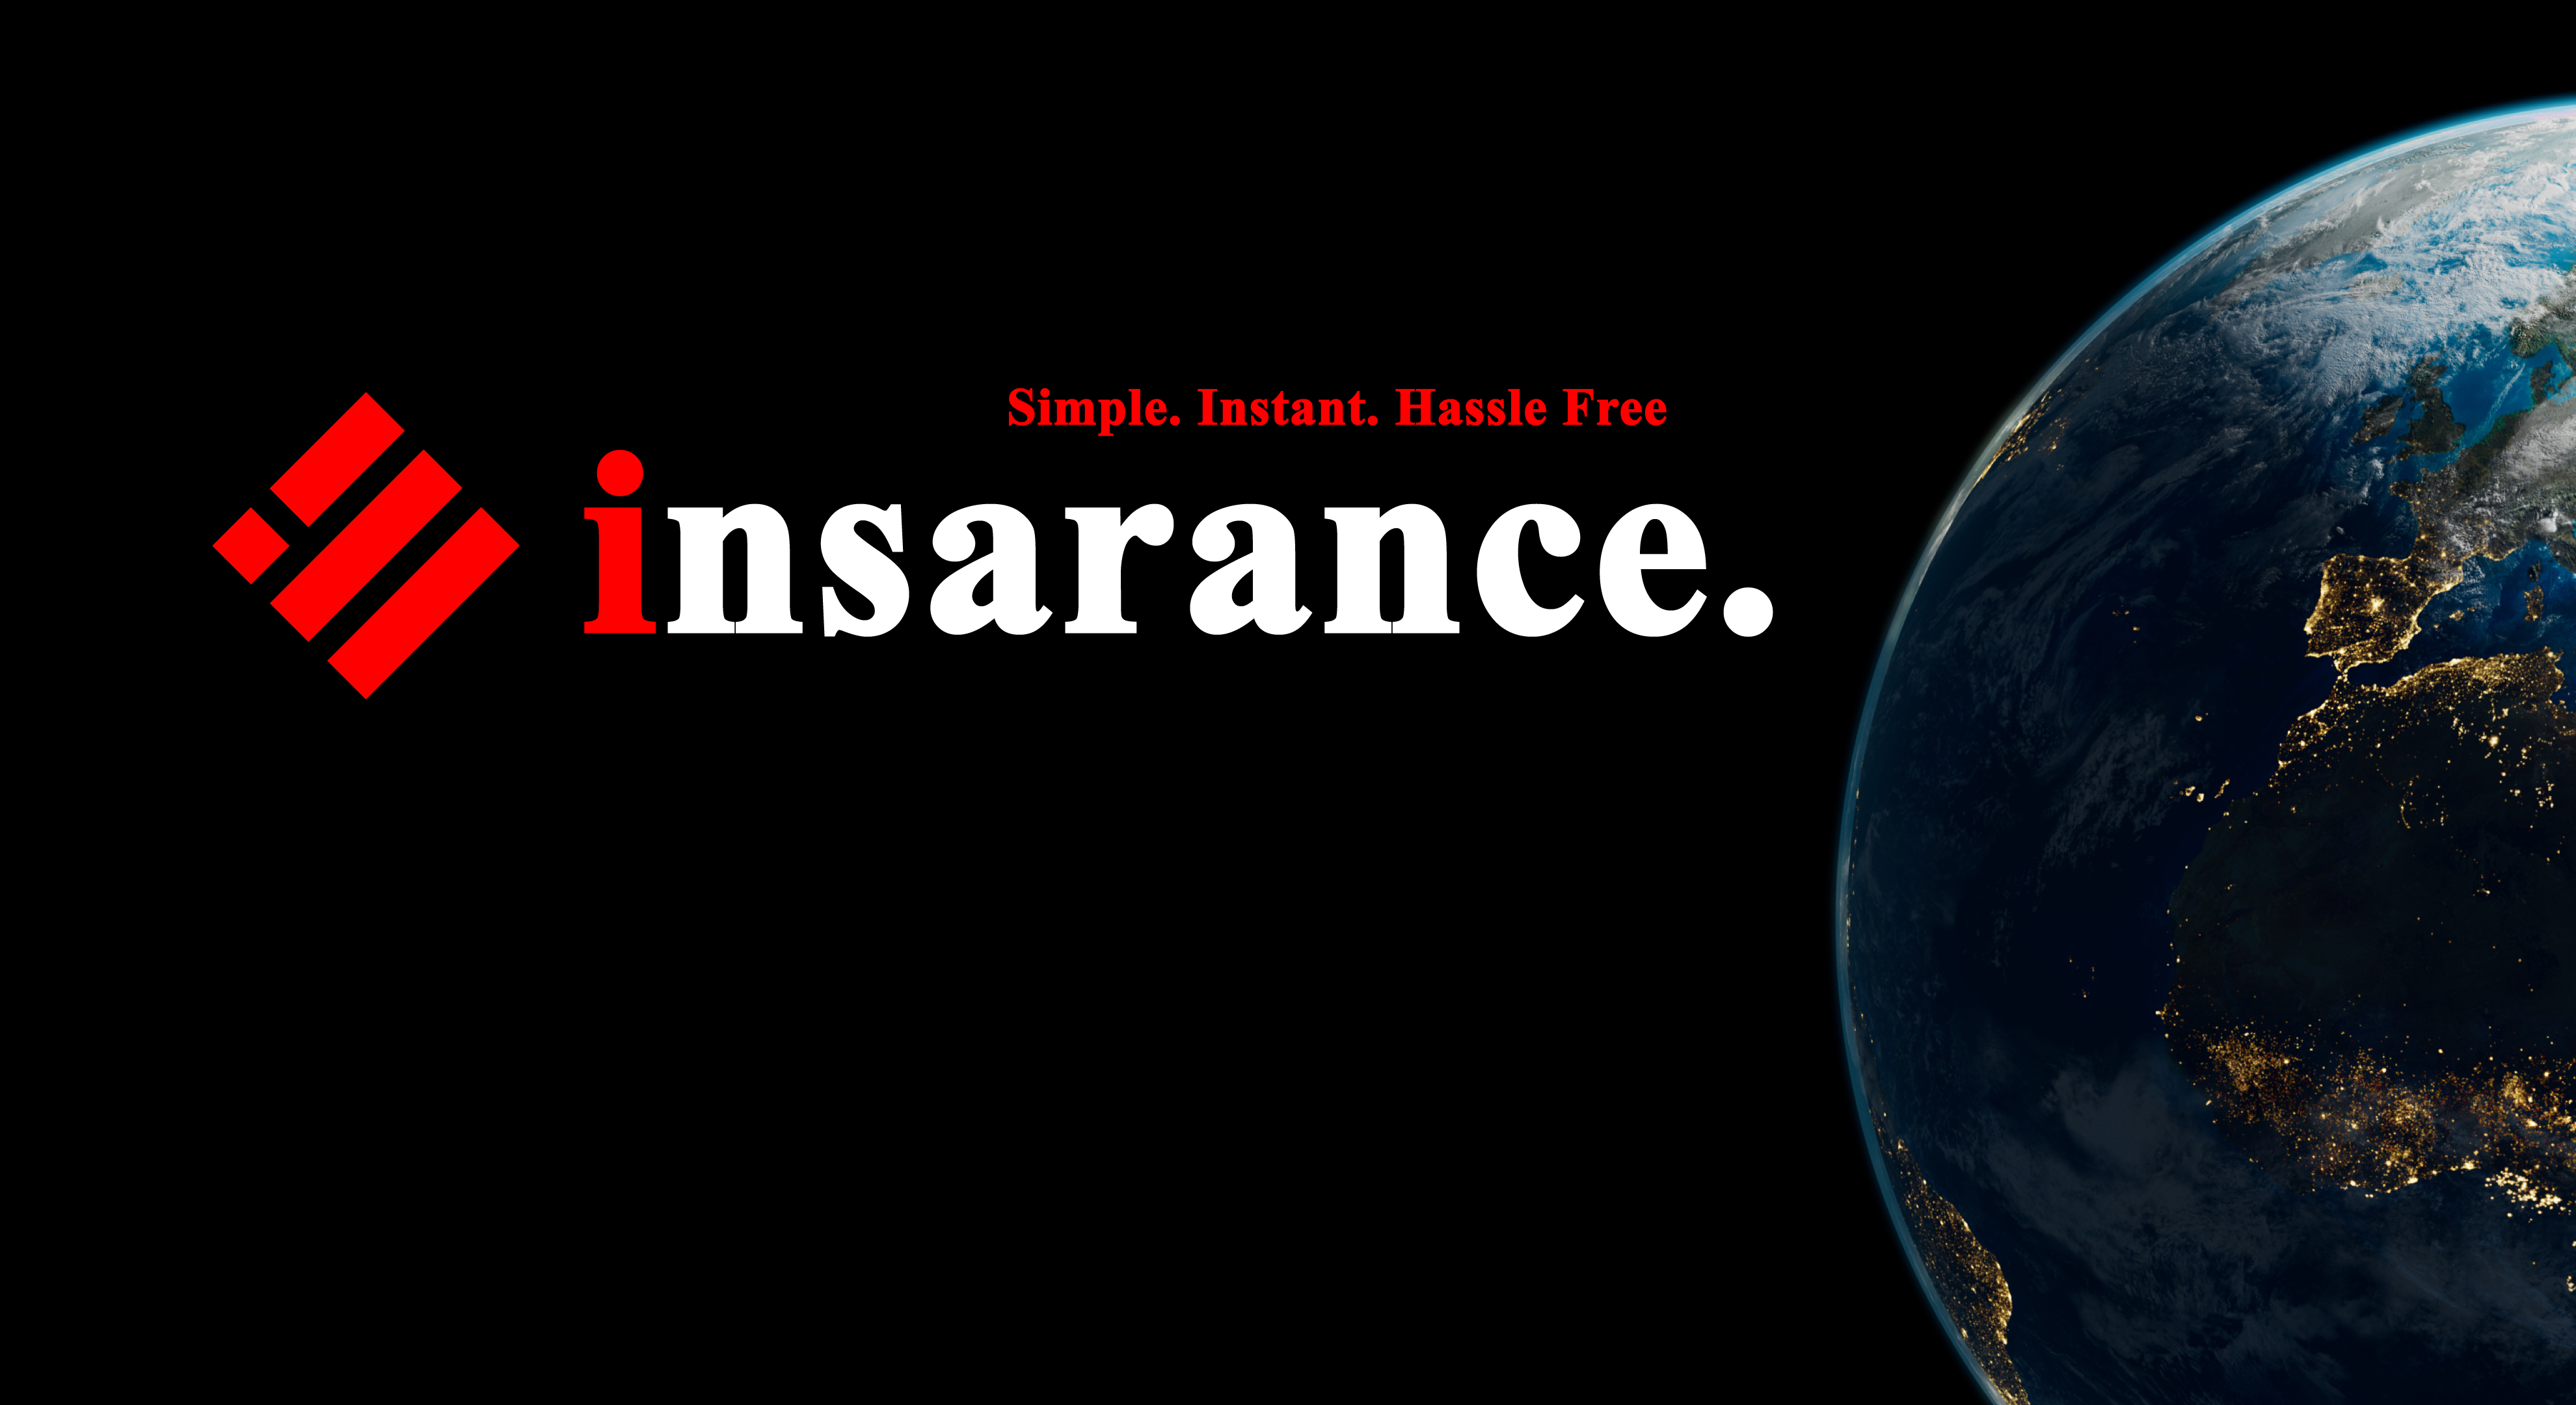 insarance_insure_insurance_insured_policy_logo.jpg